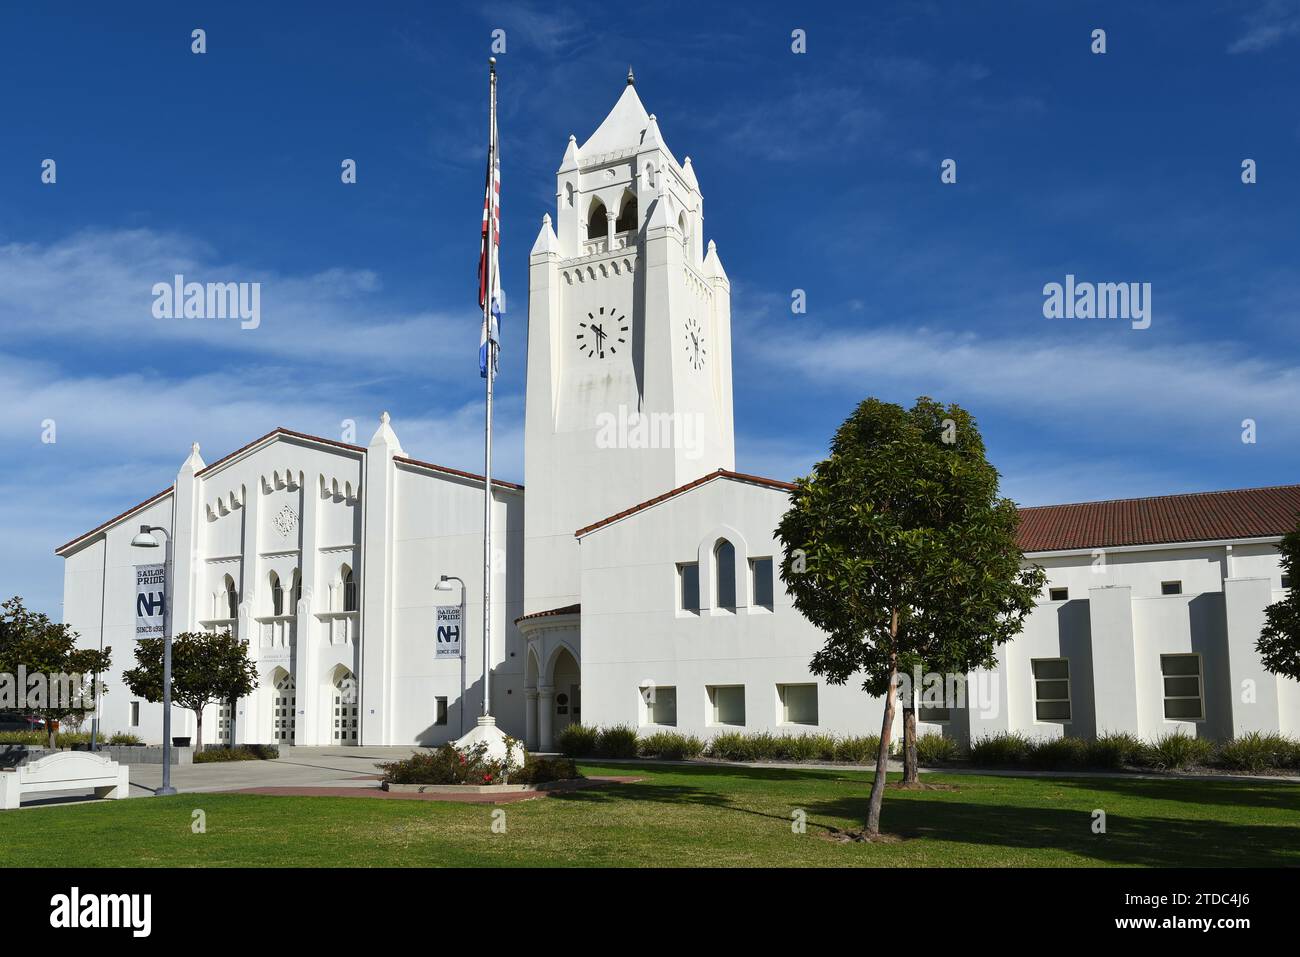 NEWPORT BEACH, KALIFORNIEN - 17. Dezember 2023: Newport Harbor High School mit dem Clock Tower und dem Robbins-Loats Performing Arts Building. Stockfoto